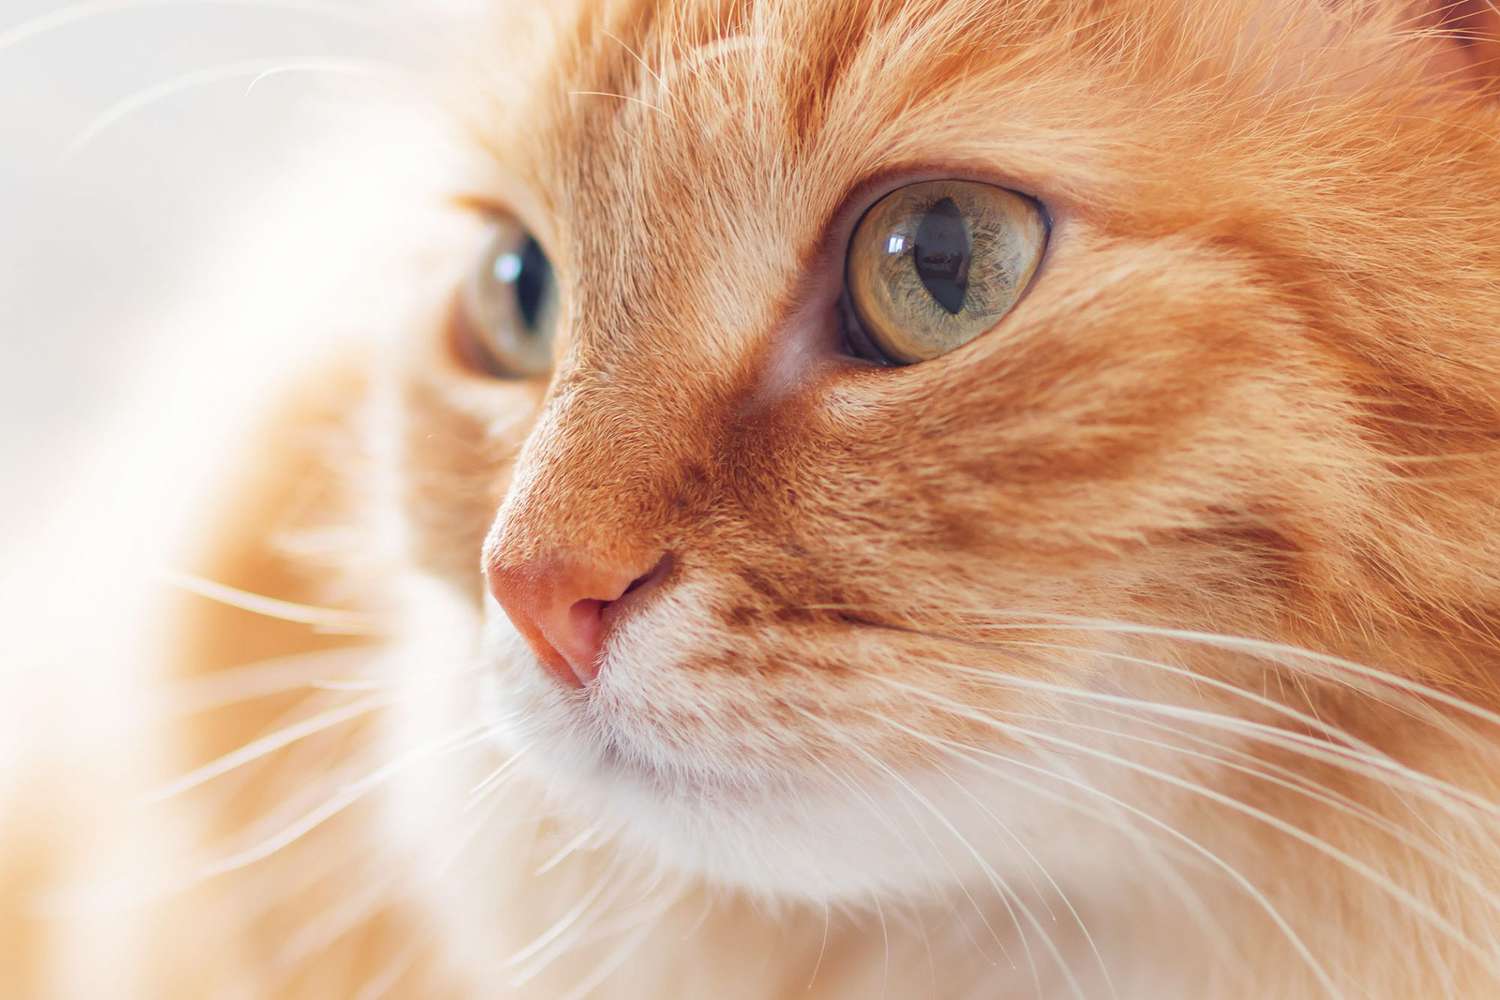 ginger tabby cat closeup portrait looking left